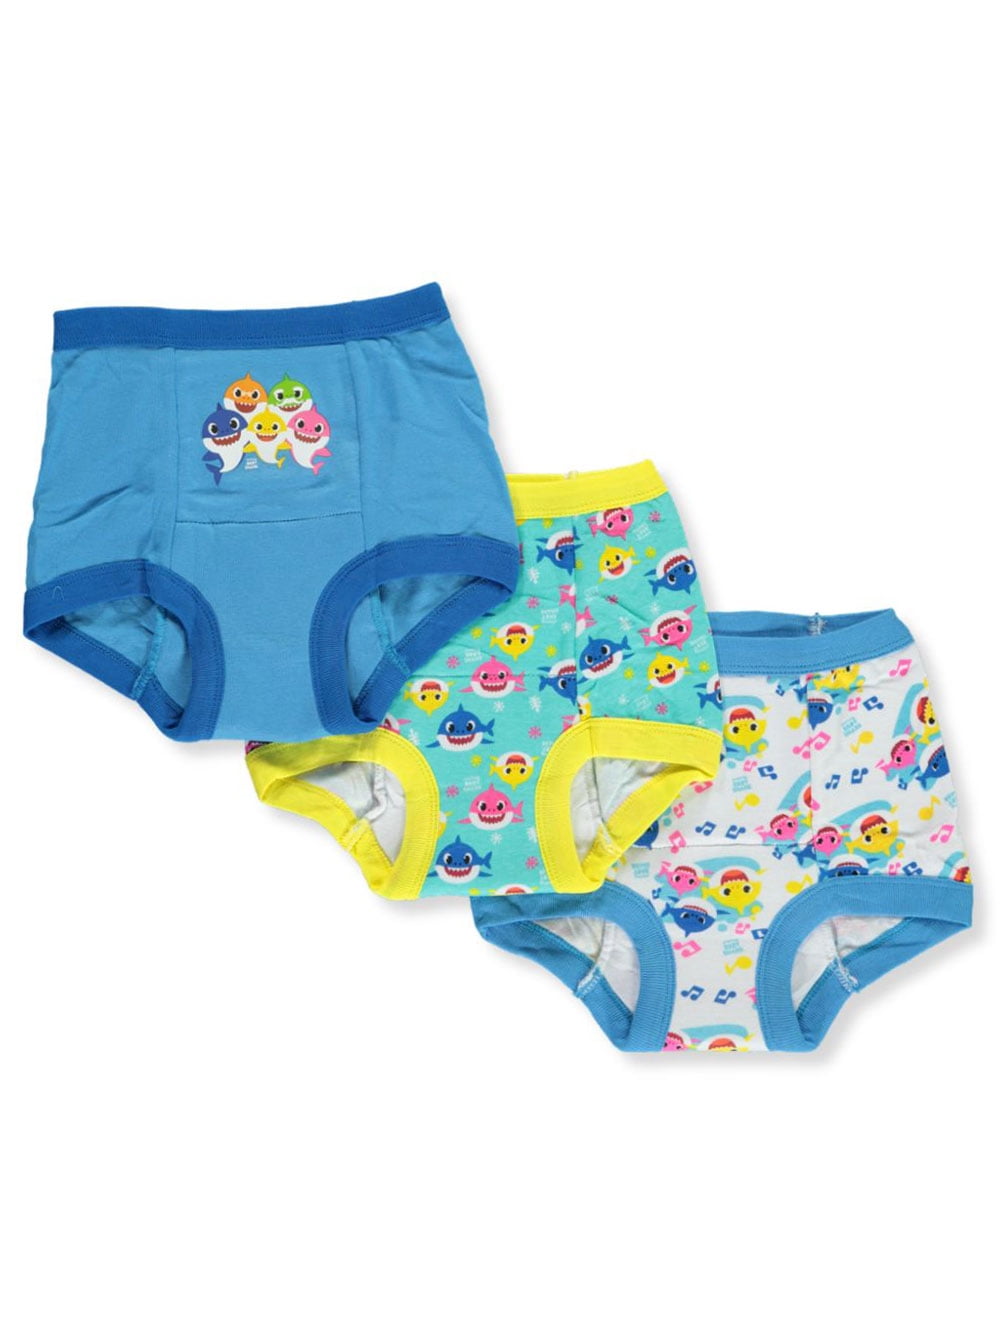 Boy, 2T Yealoo 6 Pack Baby Training Pants Toddler Potty Training Underwear Cotton 